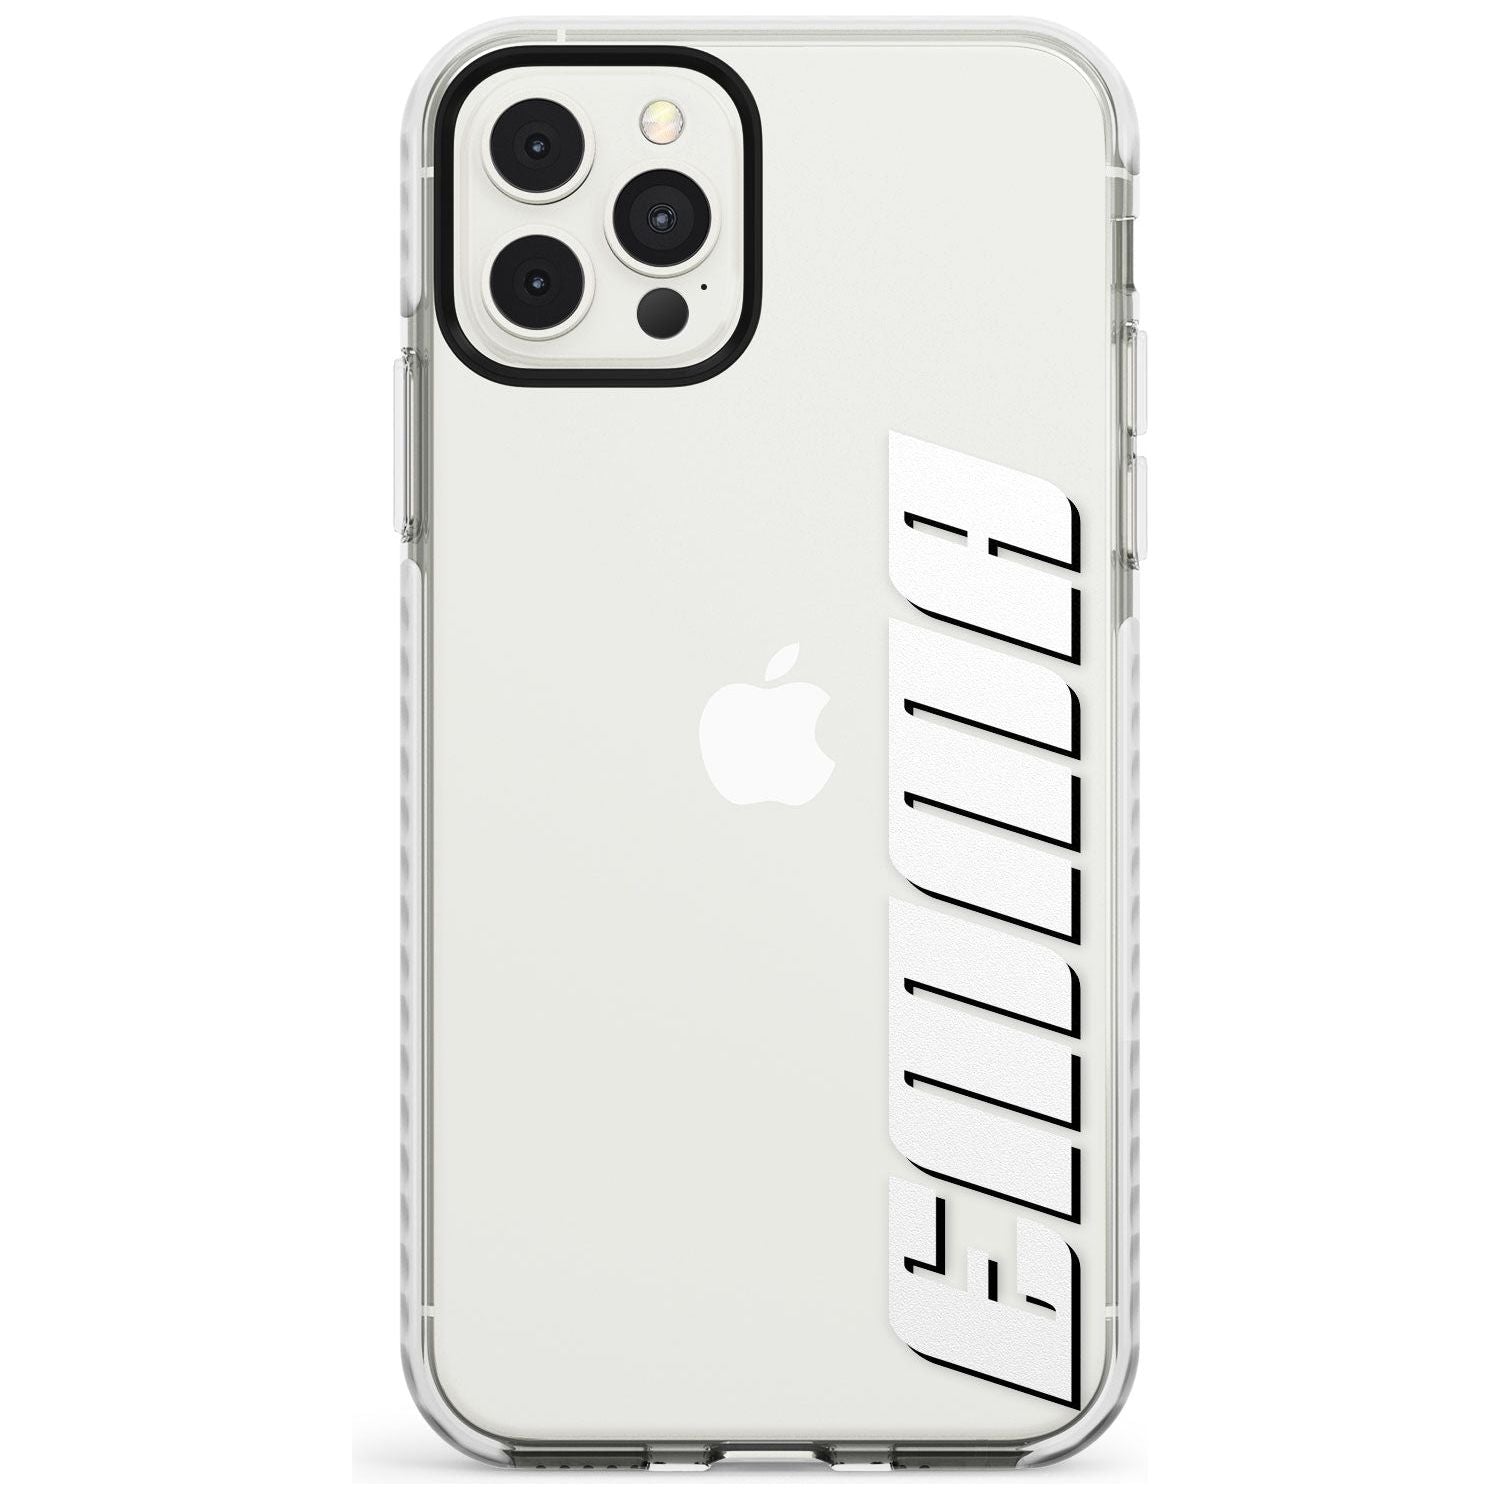 Custom Iphone Case 4B Slim TPU Phone Case for iPhone 11 Pro Max